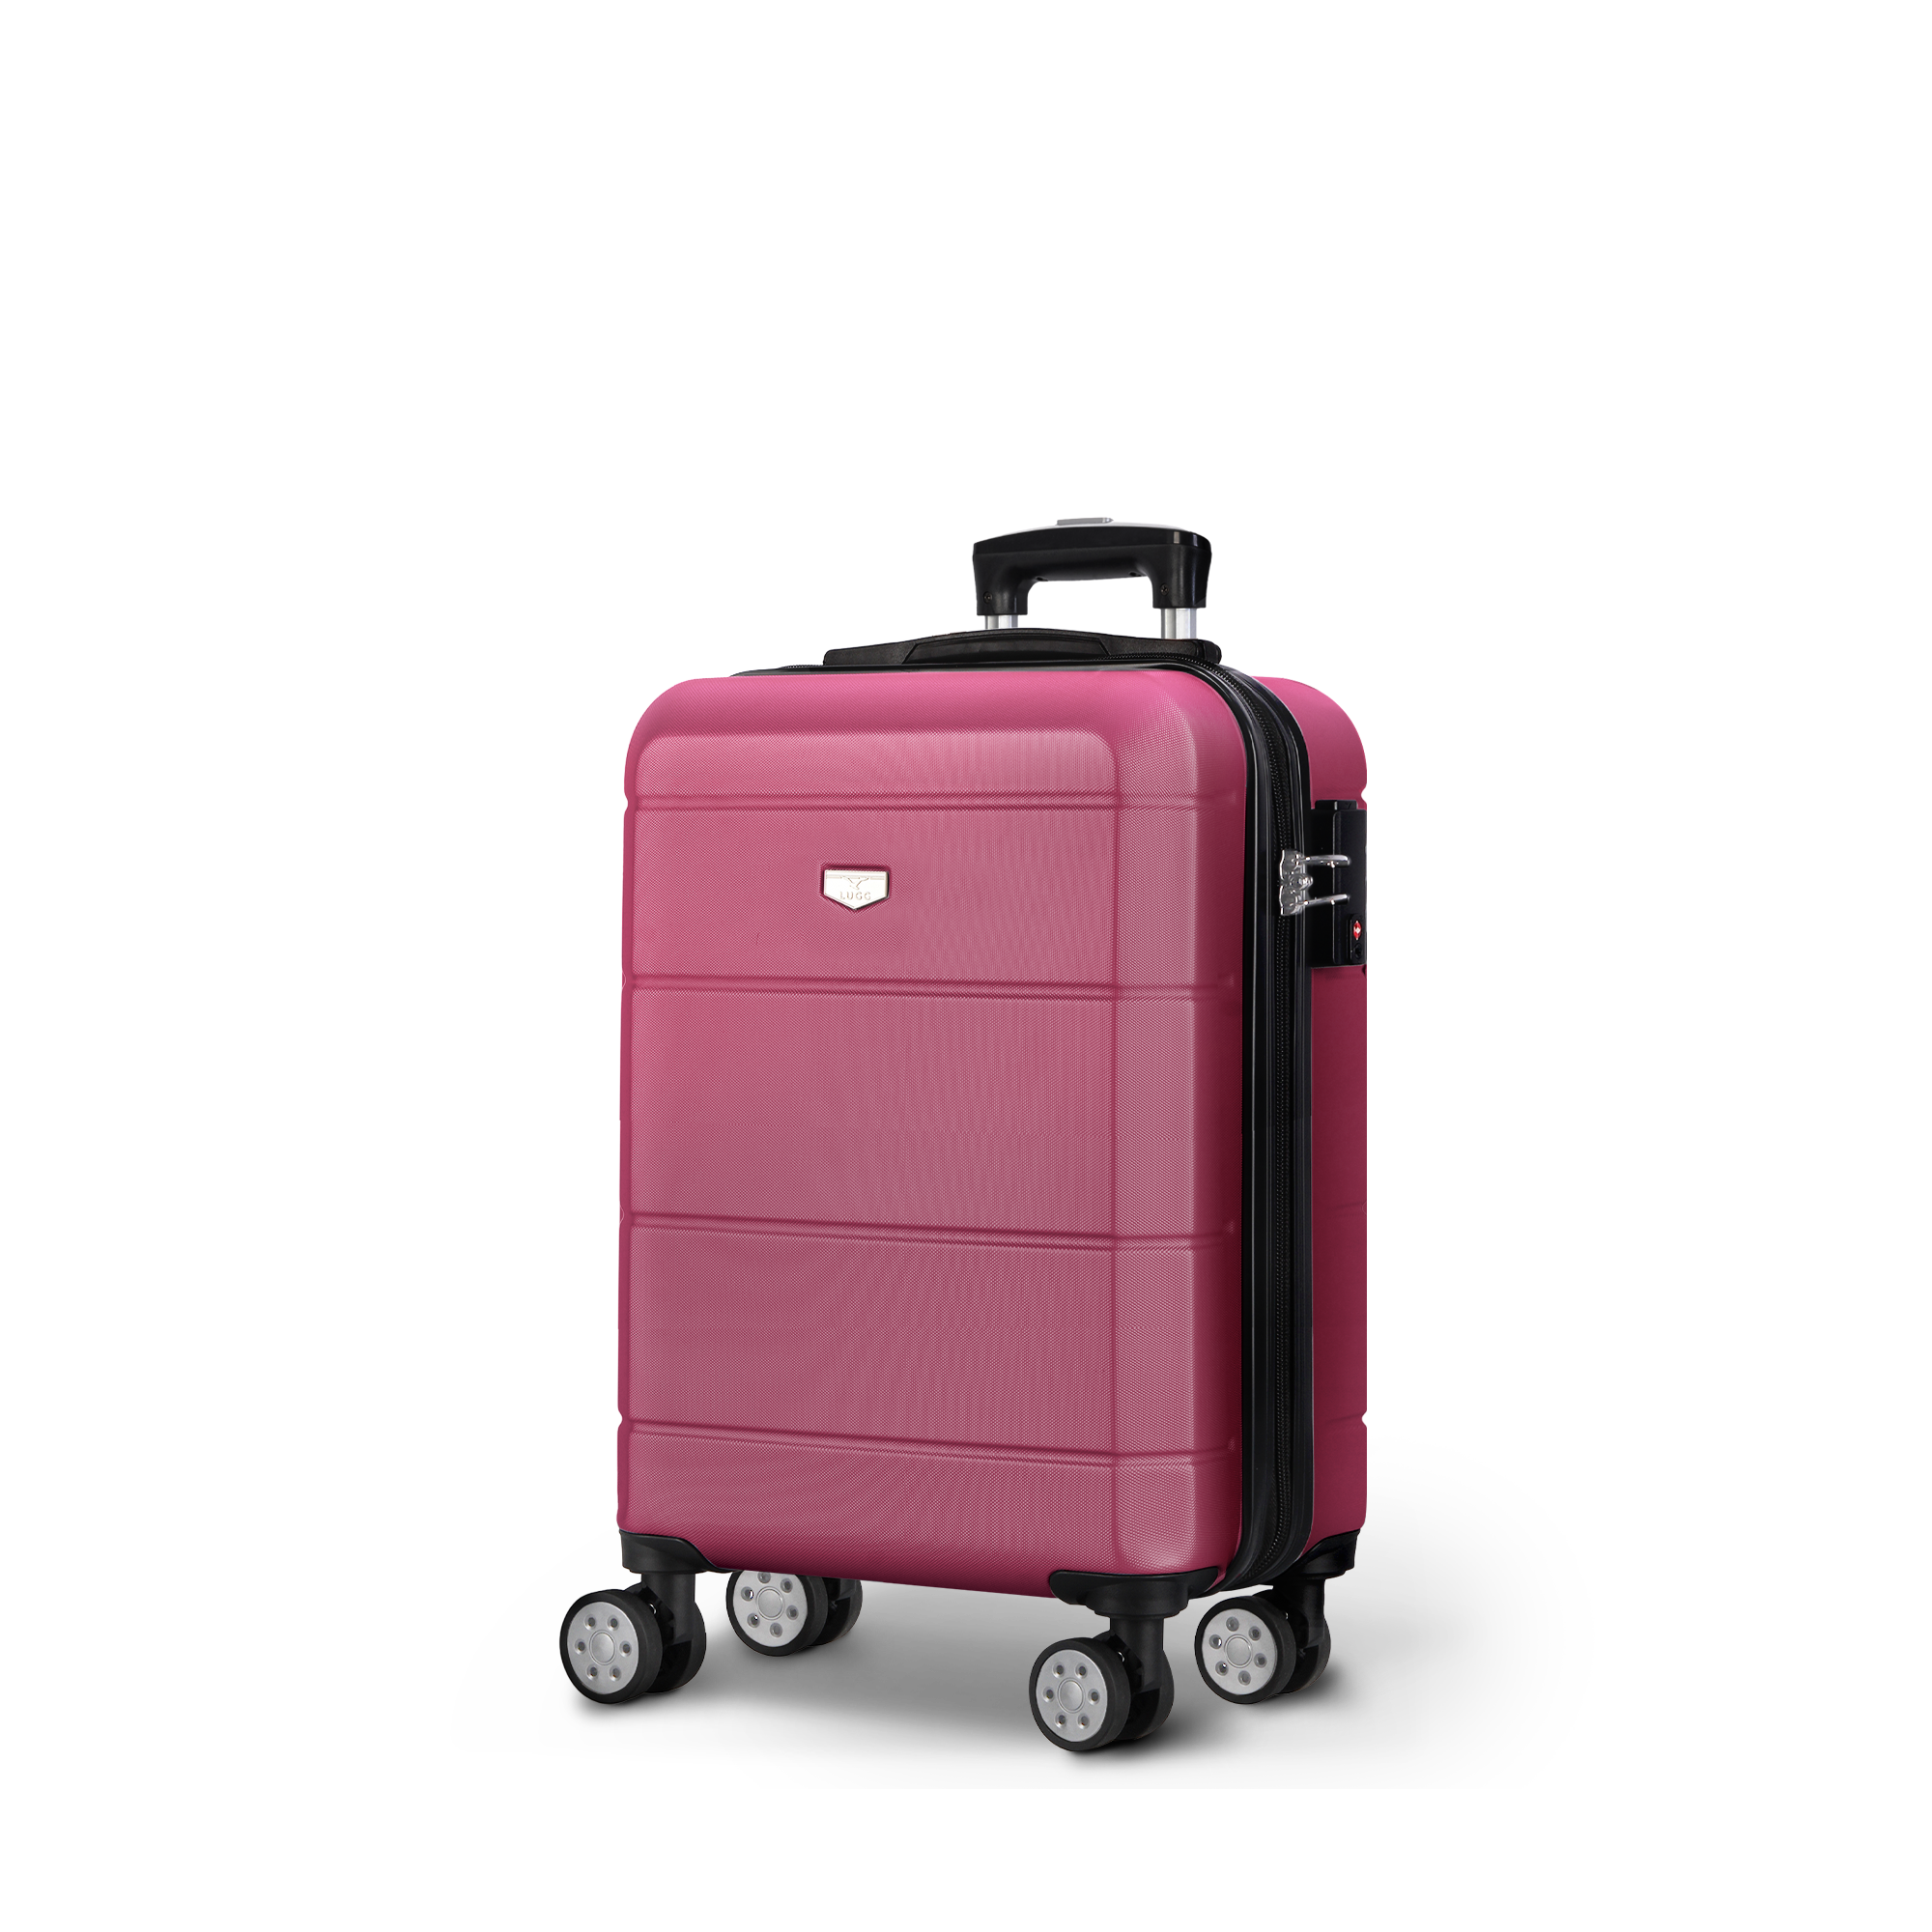 Jetset 20-inch Suitcase in Burgundy